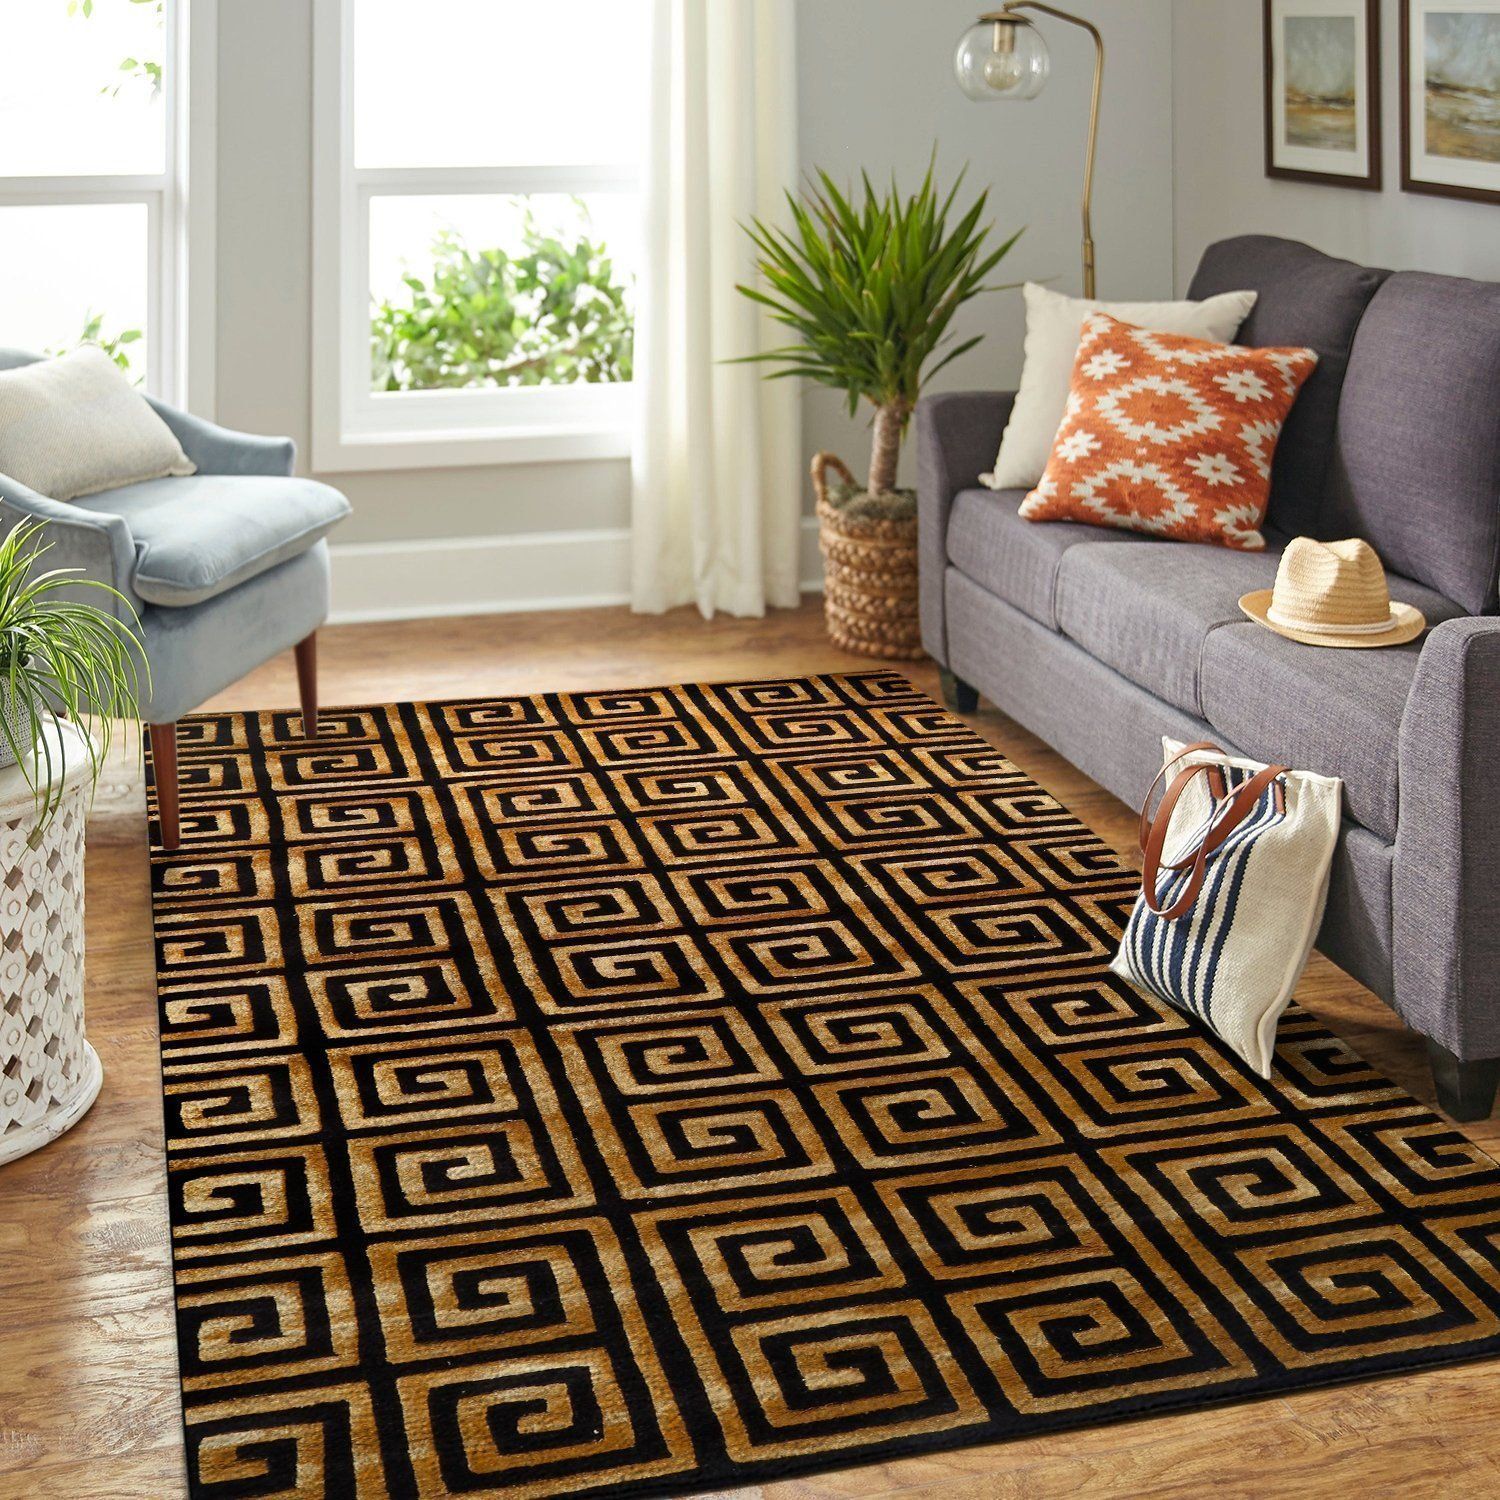 Versace Area Luxury Fashion Brand Rug Home Decor Area Carpet Door Mat